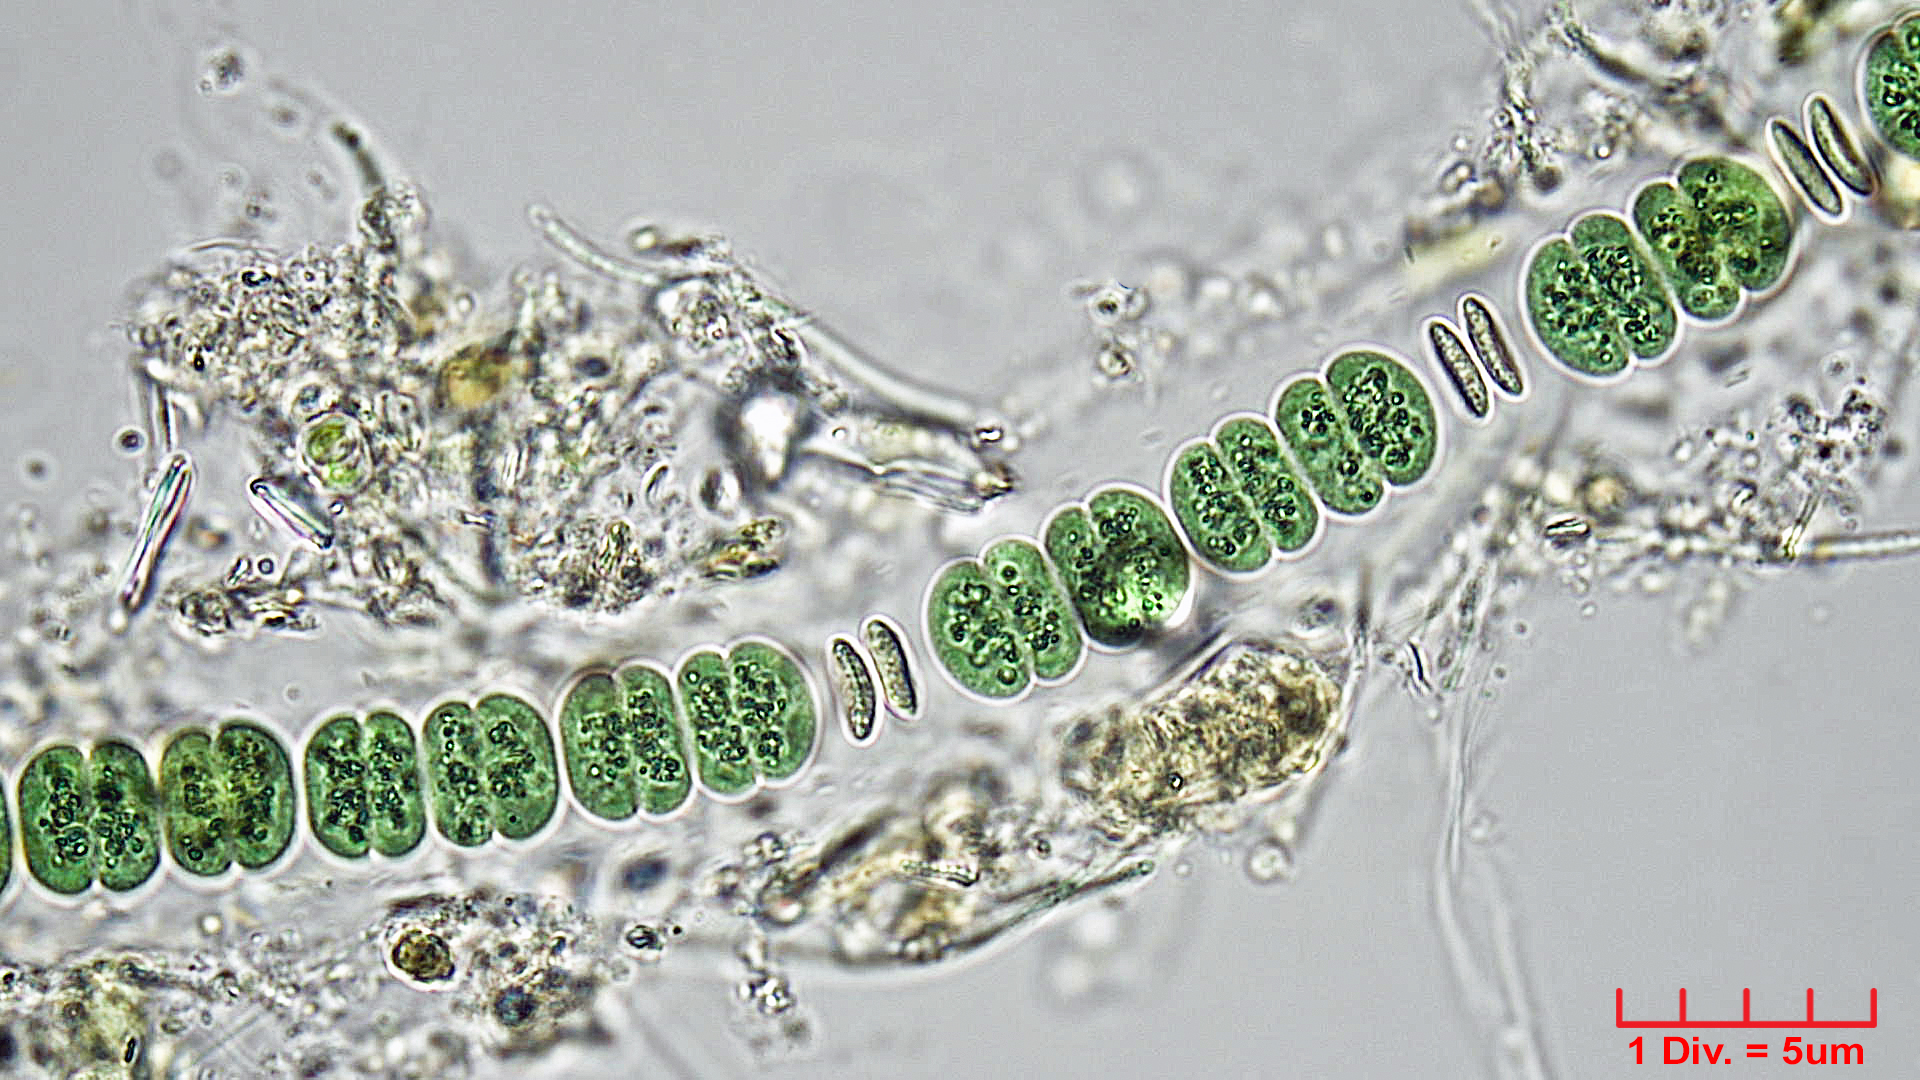 ././Cyanobacteria/Chroococcales/Cyanothricaceae/Johannesbaptistia/sp/johannesbaptistia-4.jpg